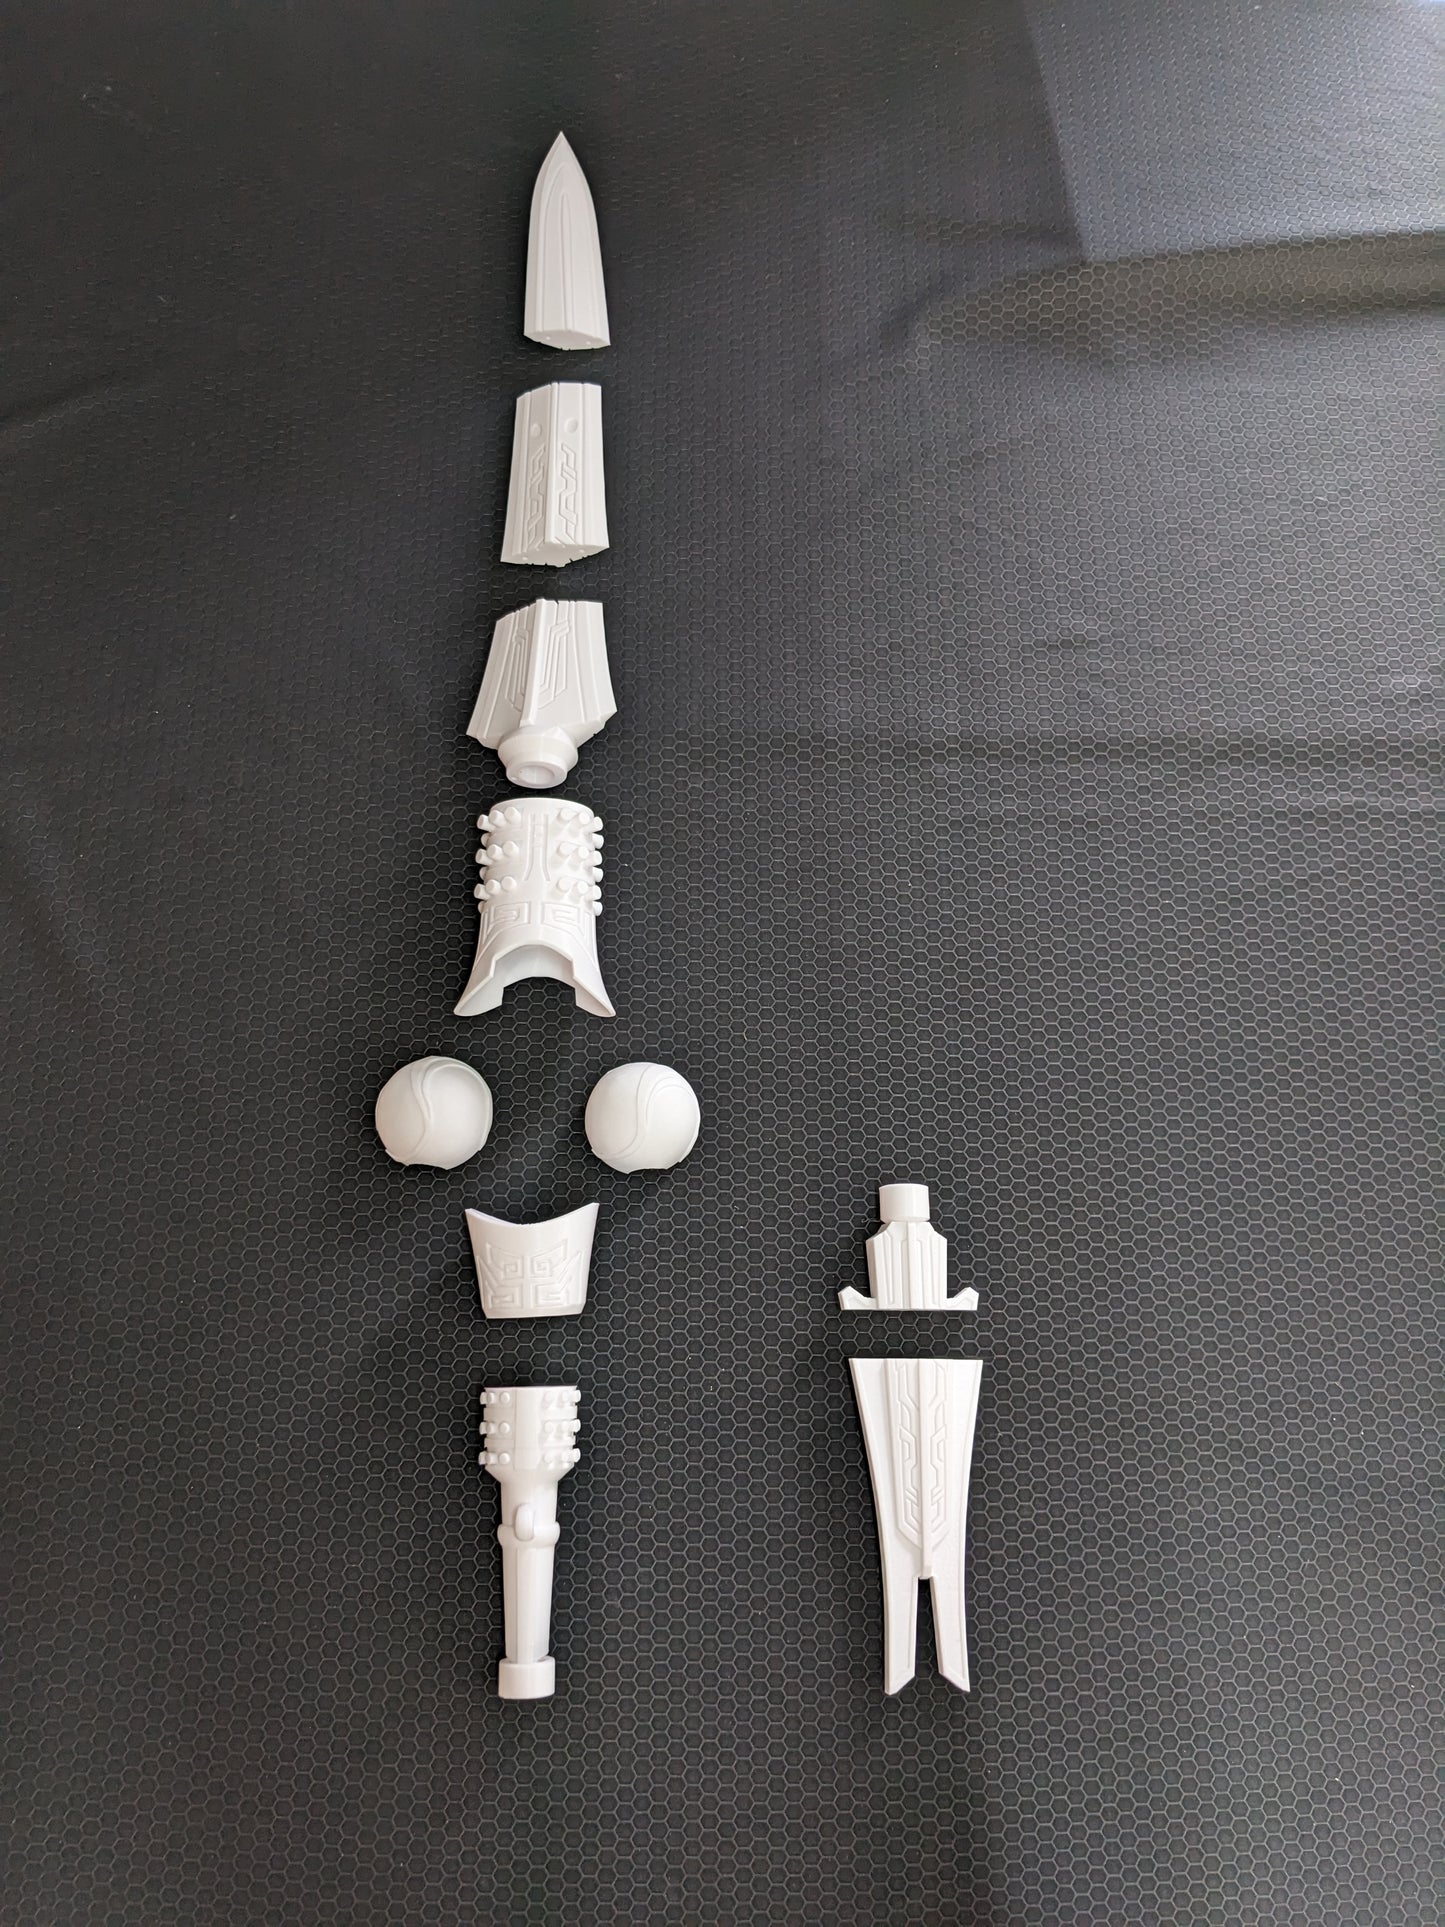 Dan Heng Spear - Digital 3D Model Files and Physical 3D Printed Kit Options - Honkai: Star Rail Cosplay - Dan Heng Cosplay - Cloud Piercer